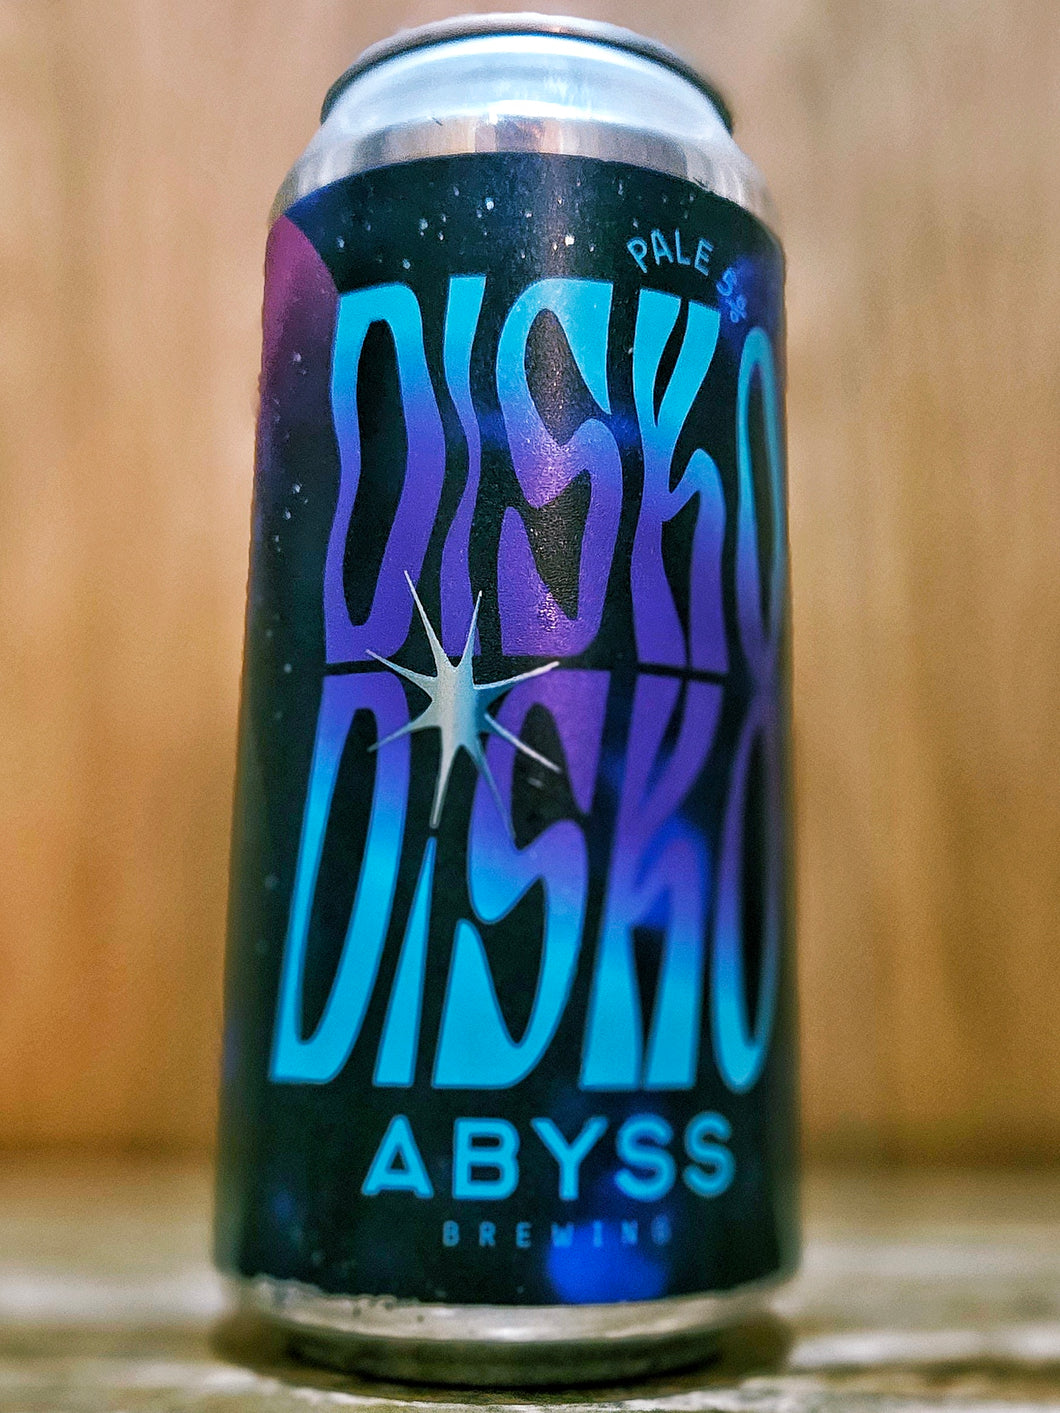 Abyss Brewing - Disko Disko